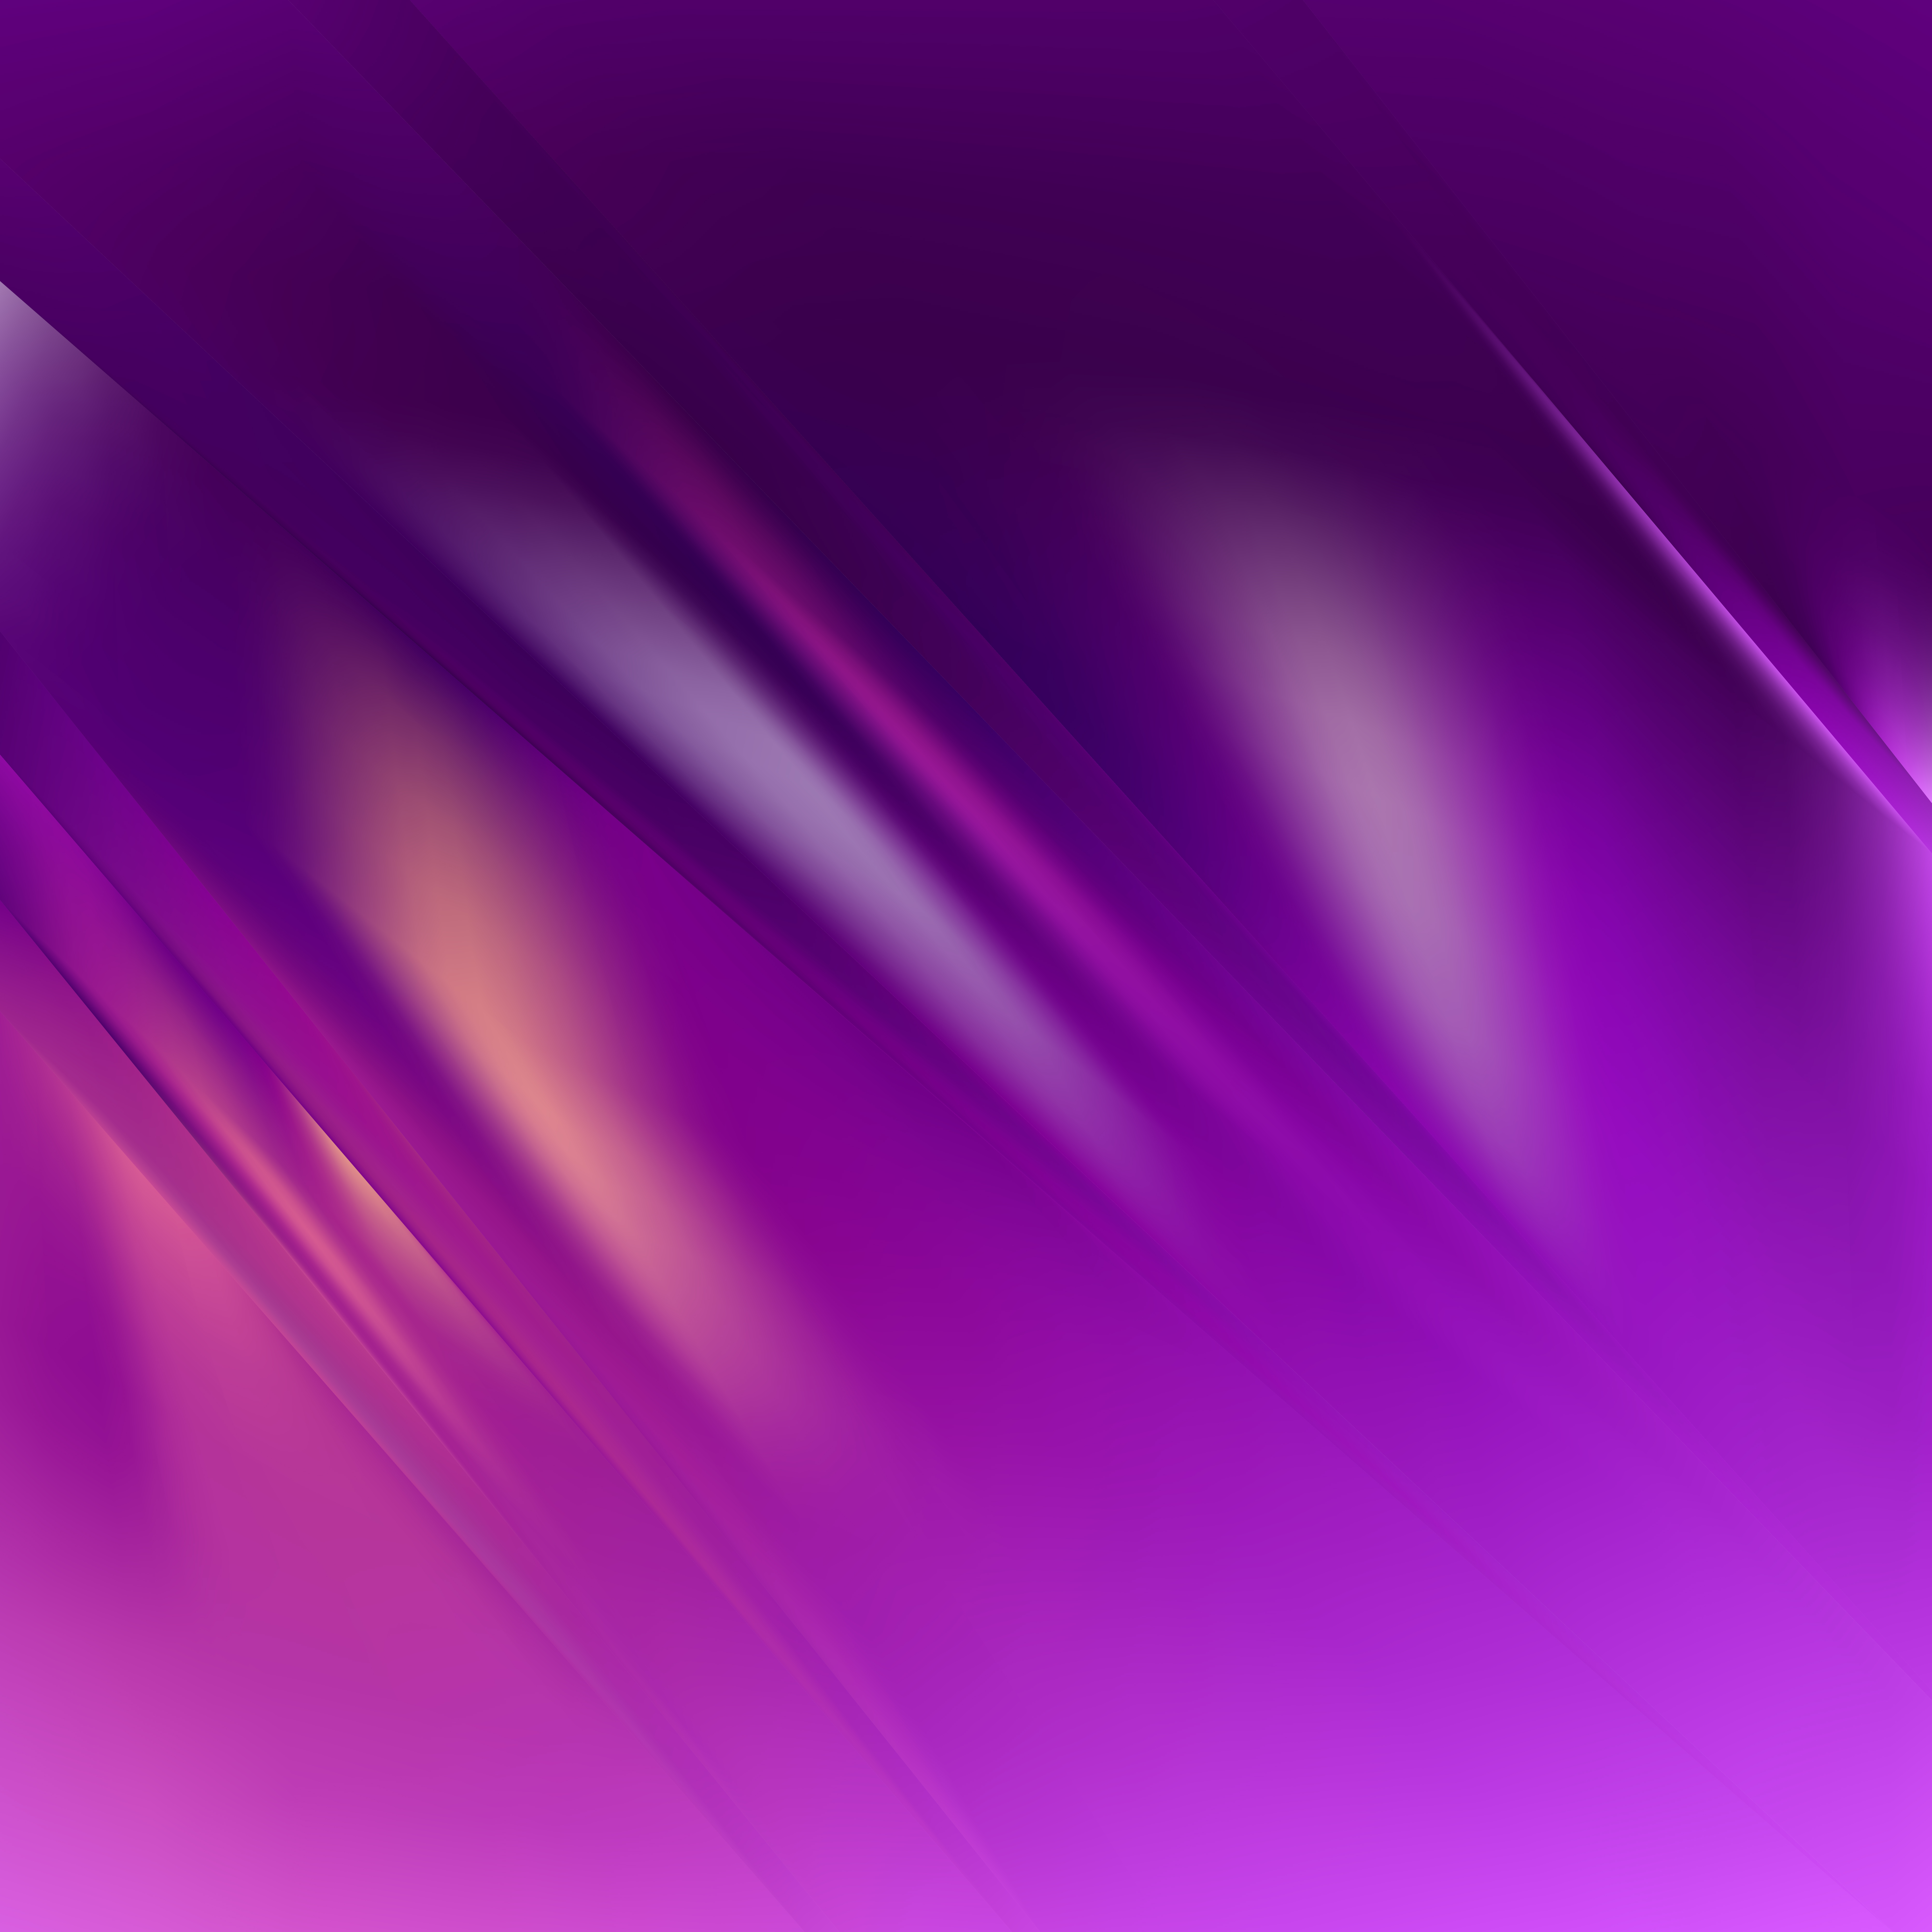 Free Abstract Dark Purple Graphic Background